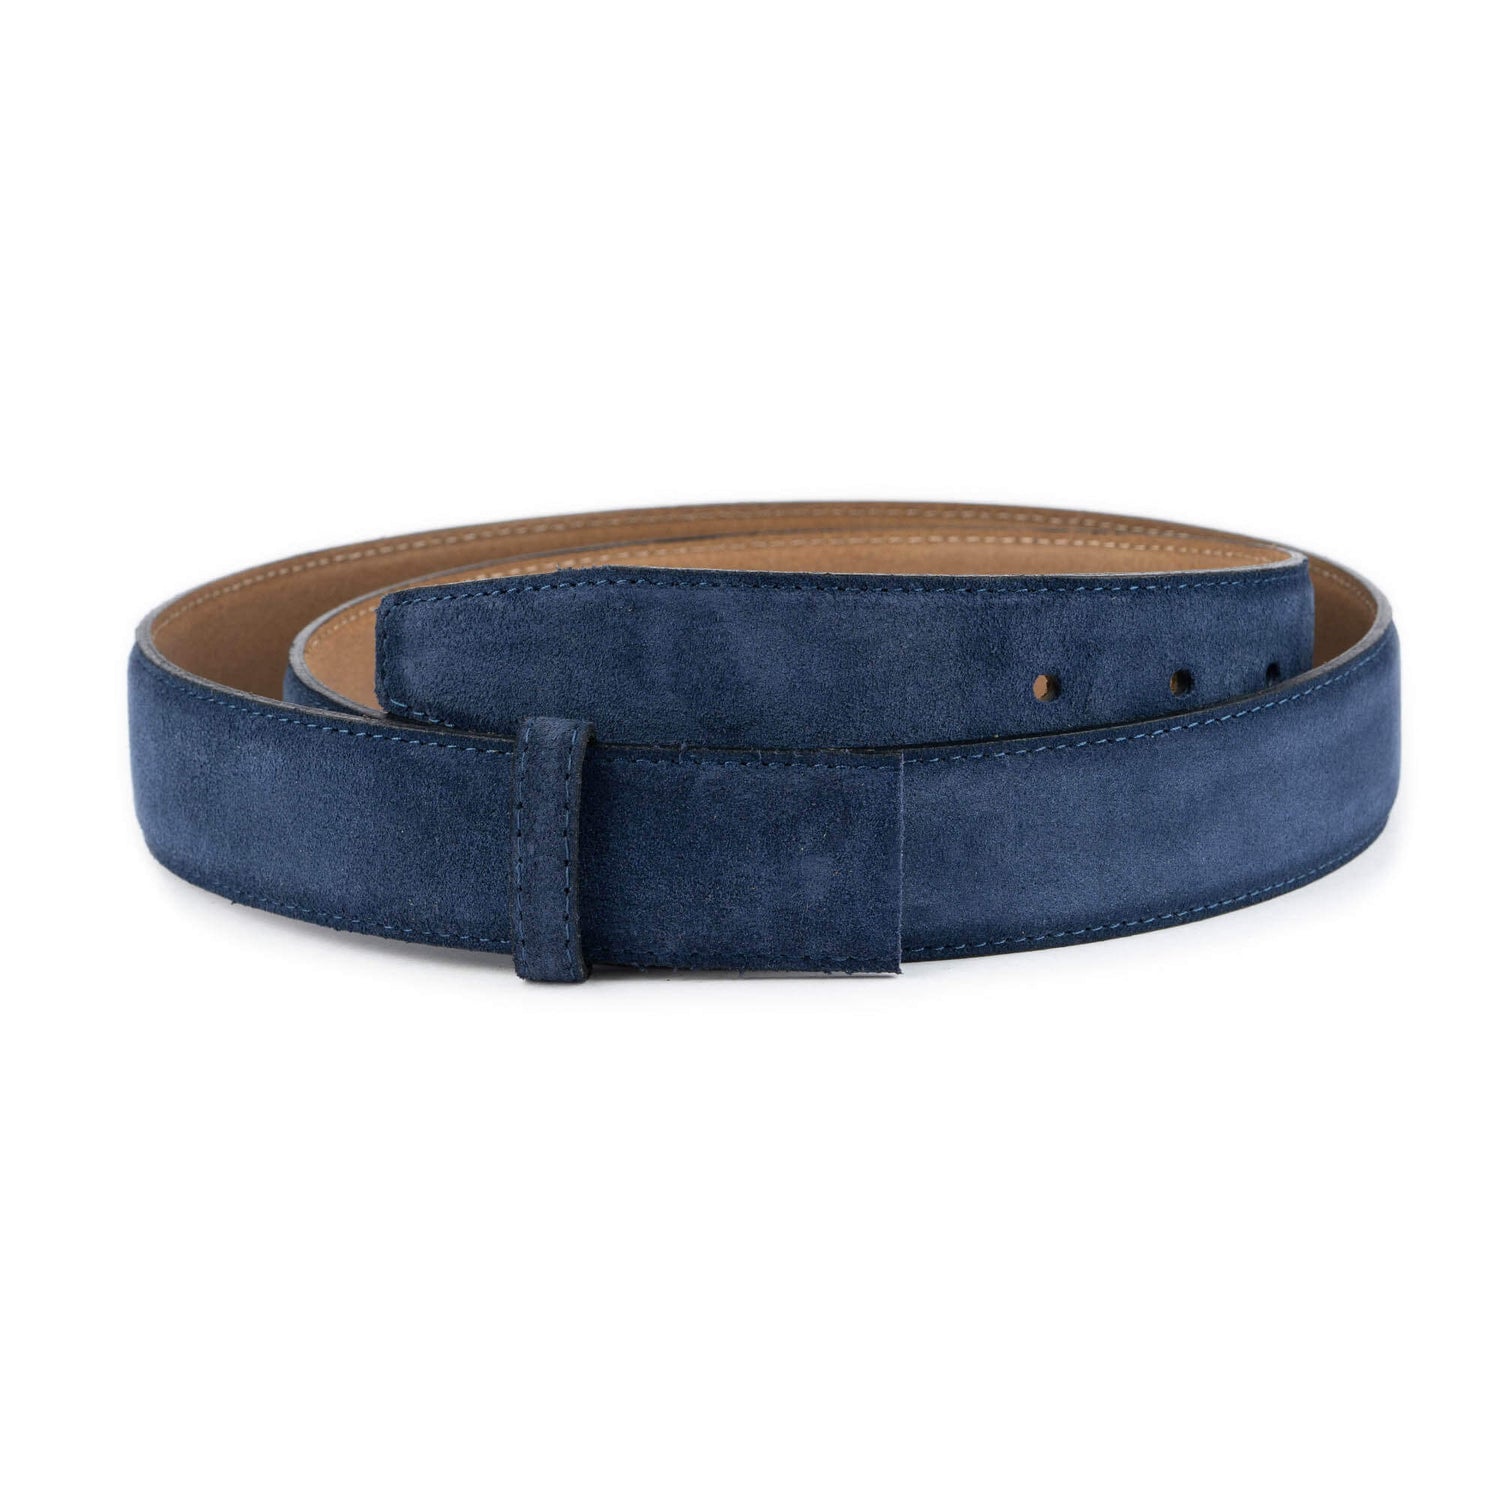 3.5 cm Blue Suede Leather Belt Strap For Ferragamo Buckles Replacement